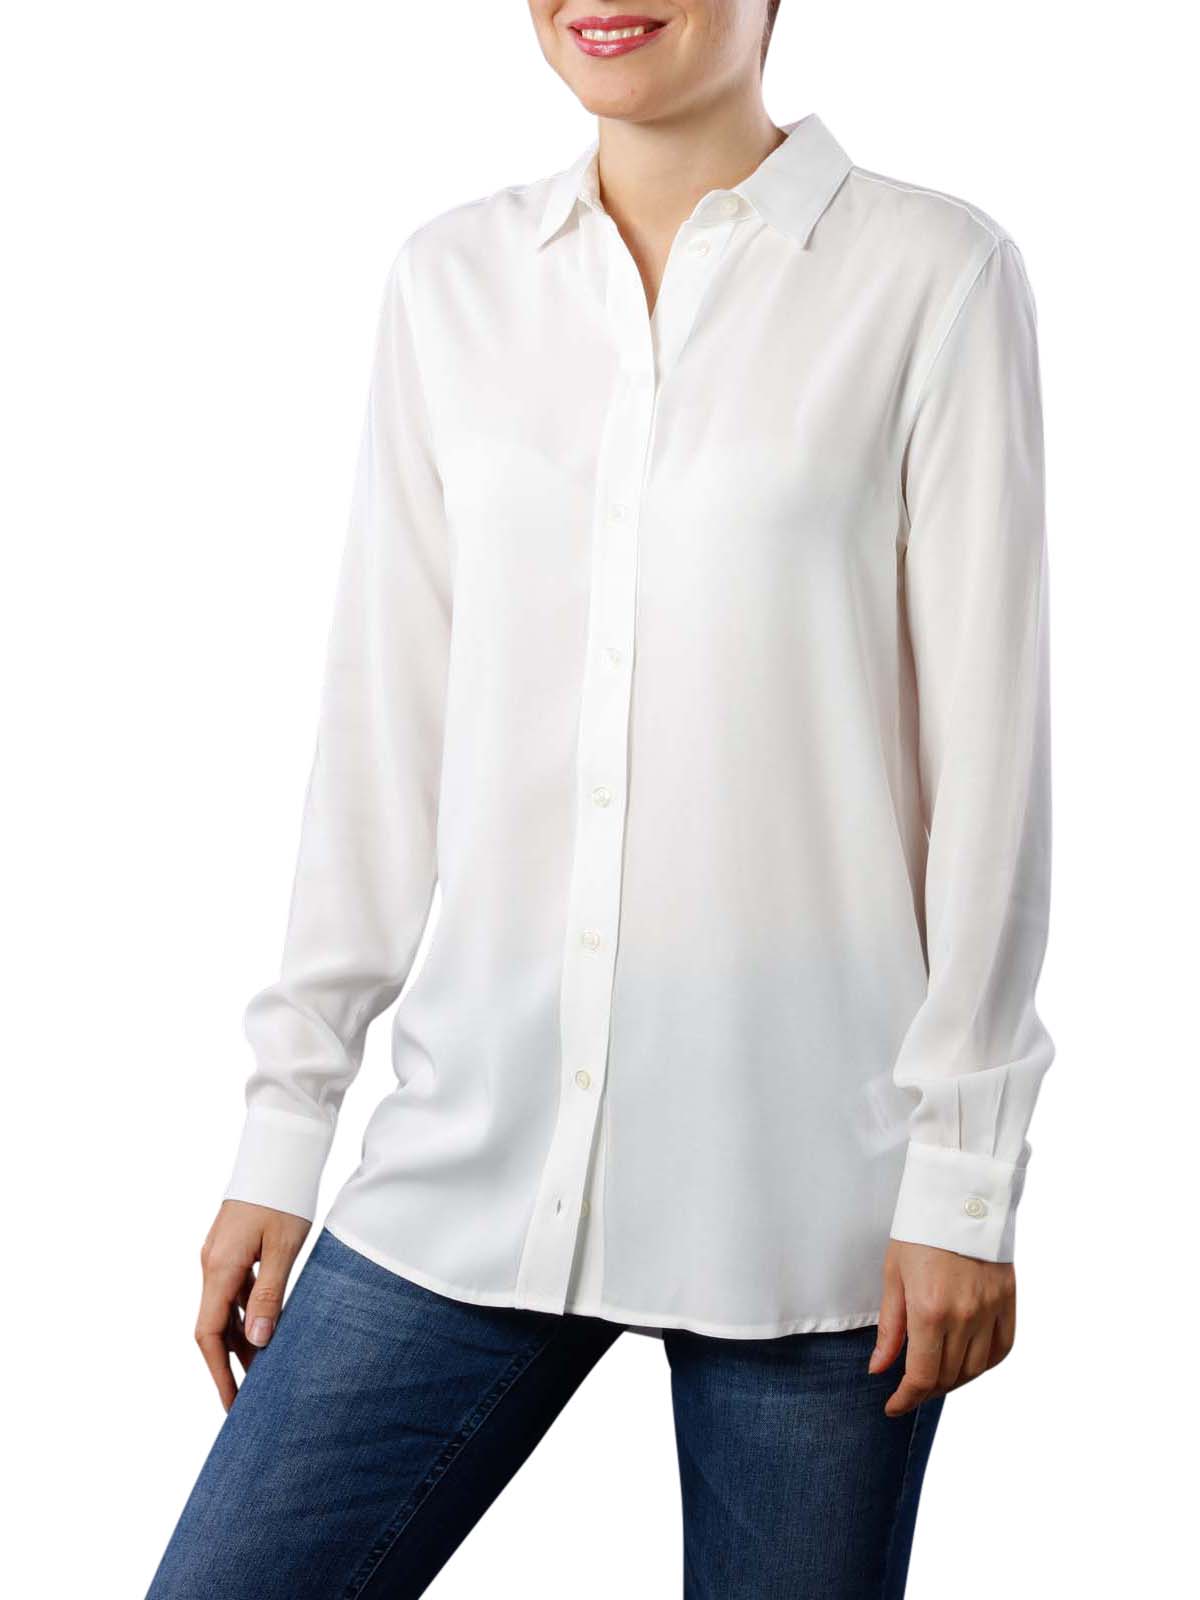 white polo shirt long sleeve women's